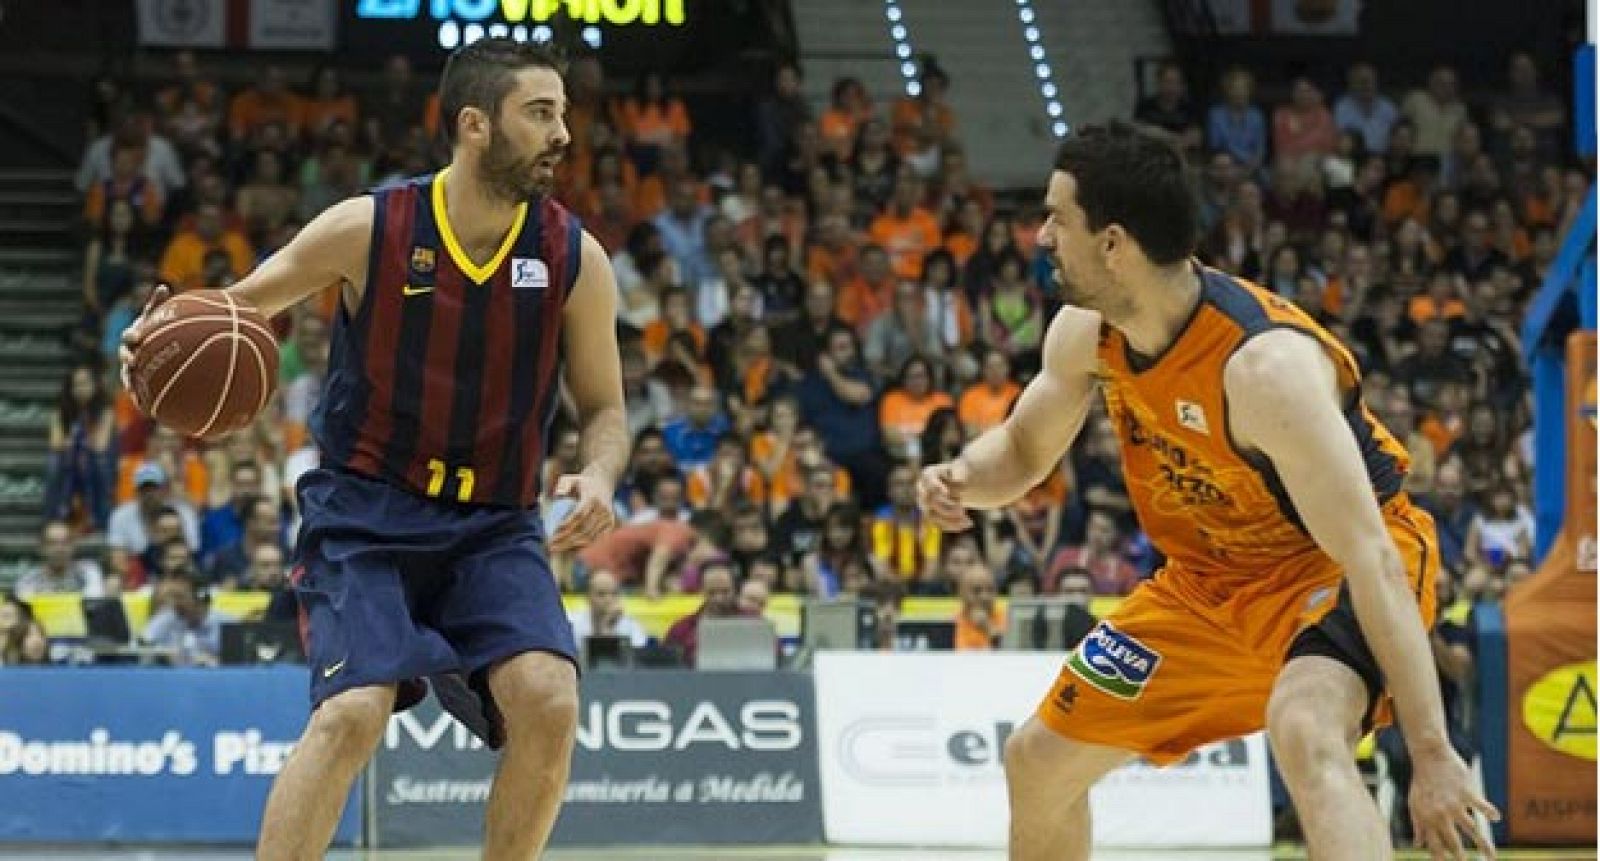 Barcelona - Valencia Basket